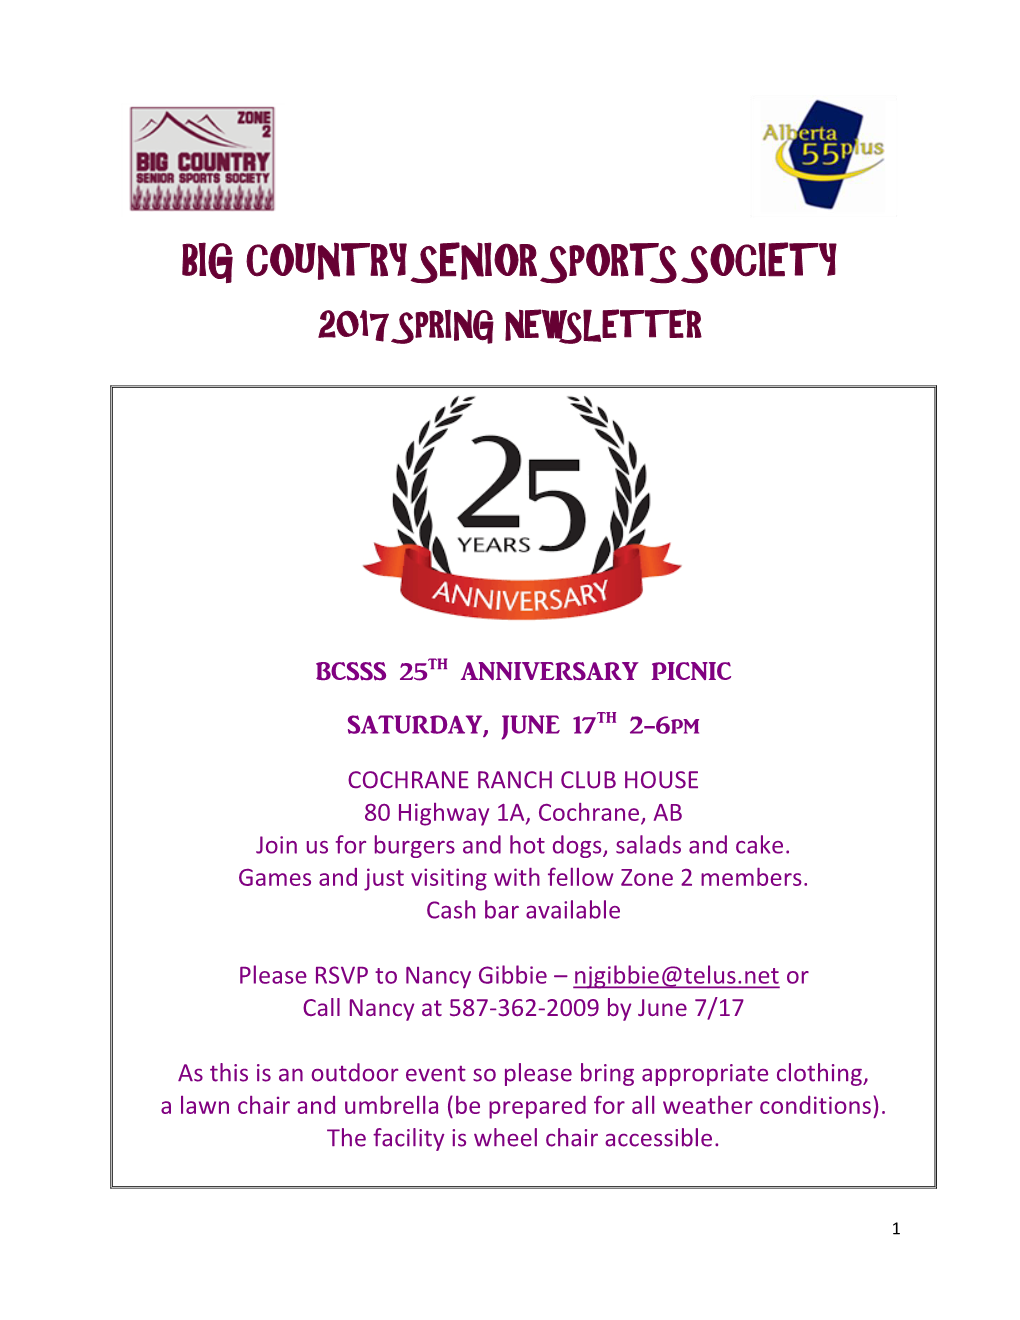 Big Country Senior Sports Society 2017 Spring Newsletter